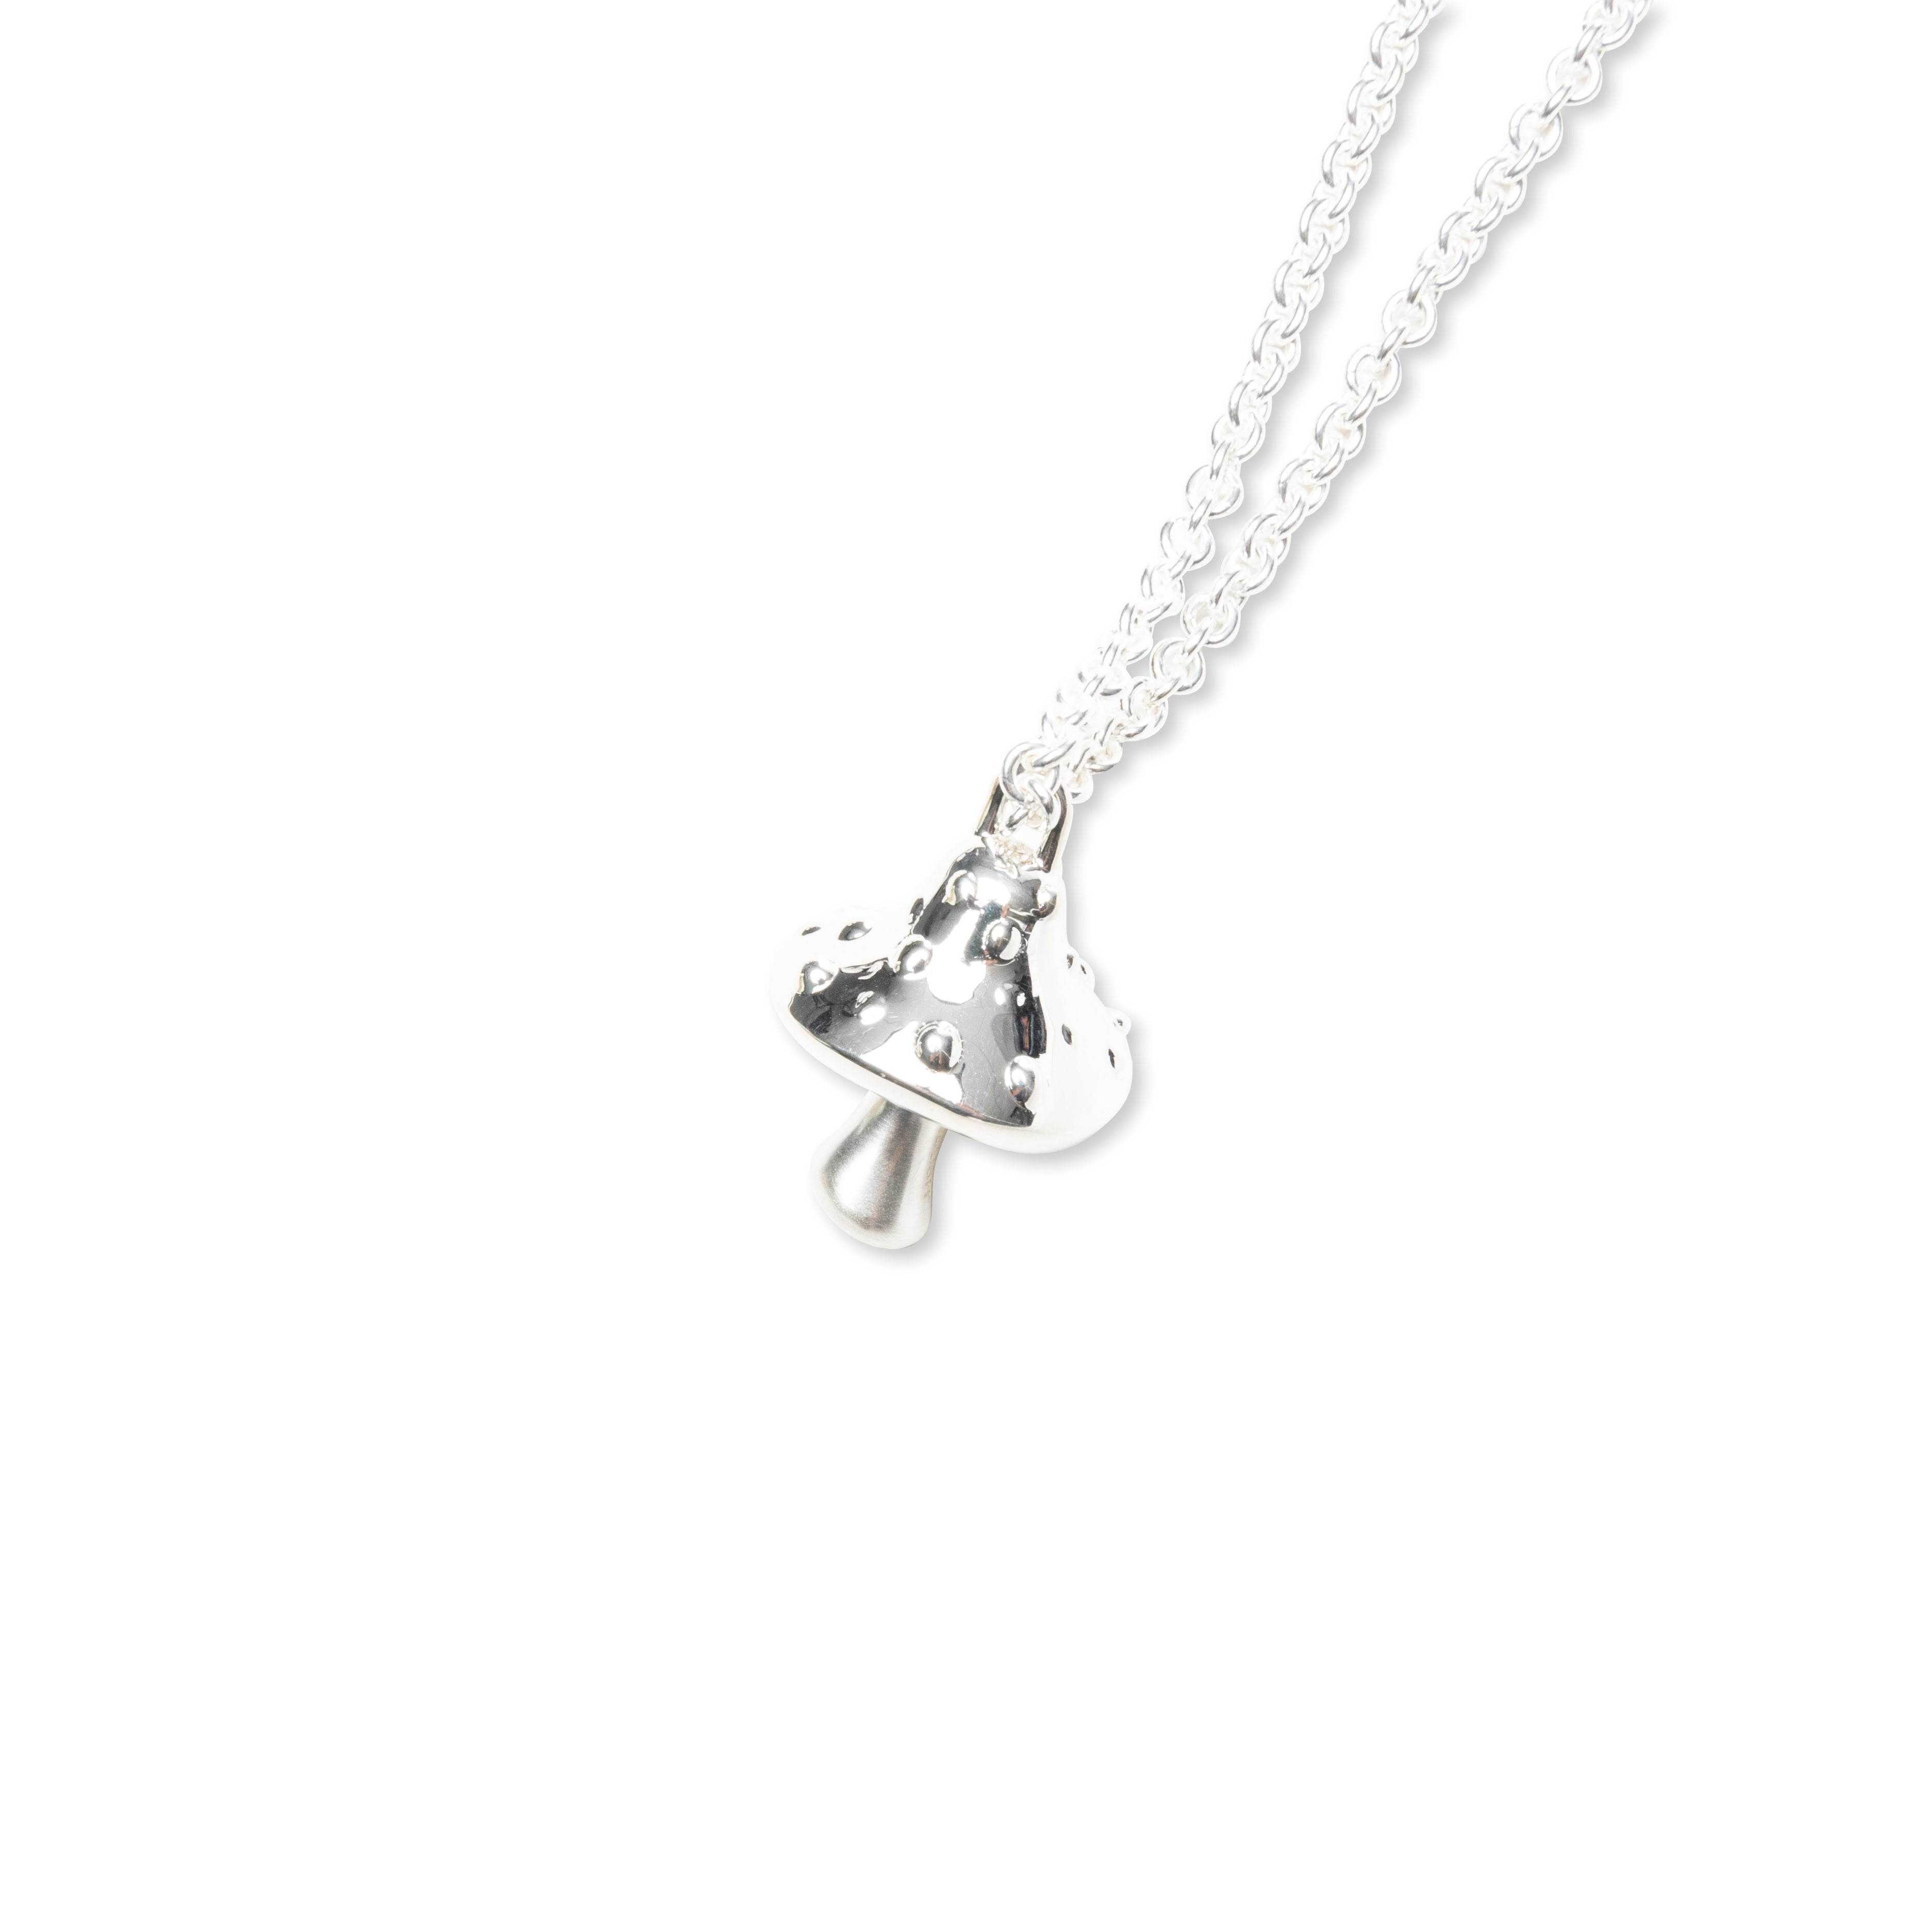 Mushroom Charm Necklace - Silver